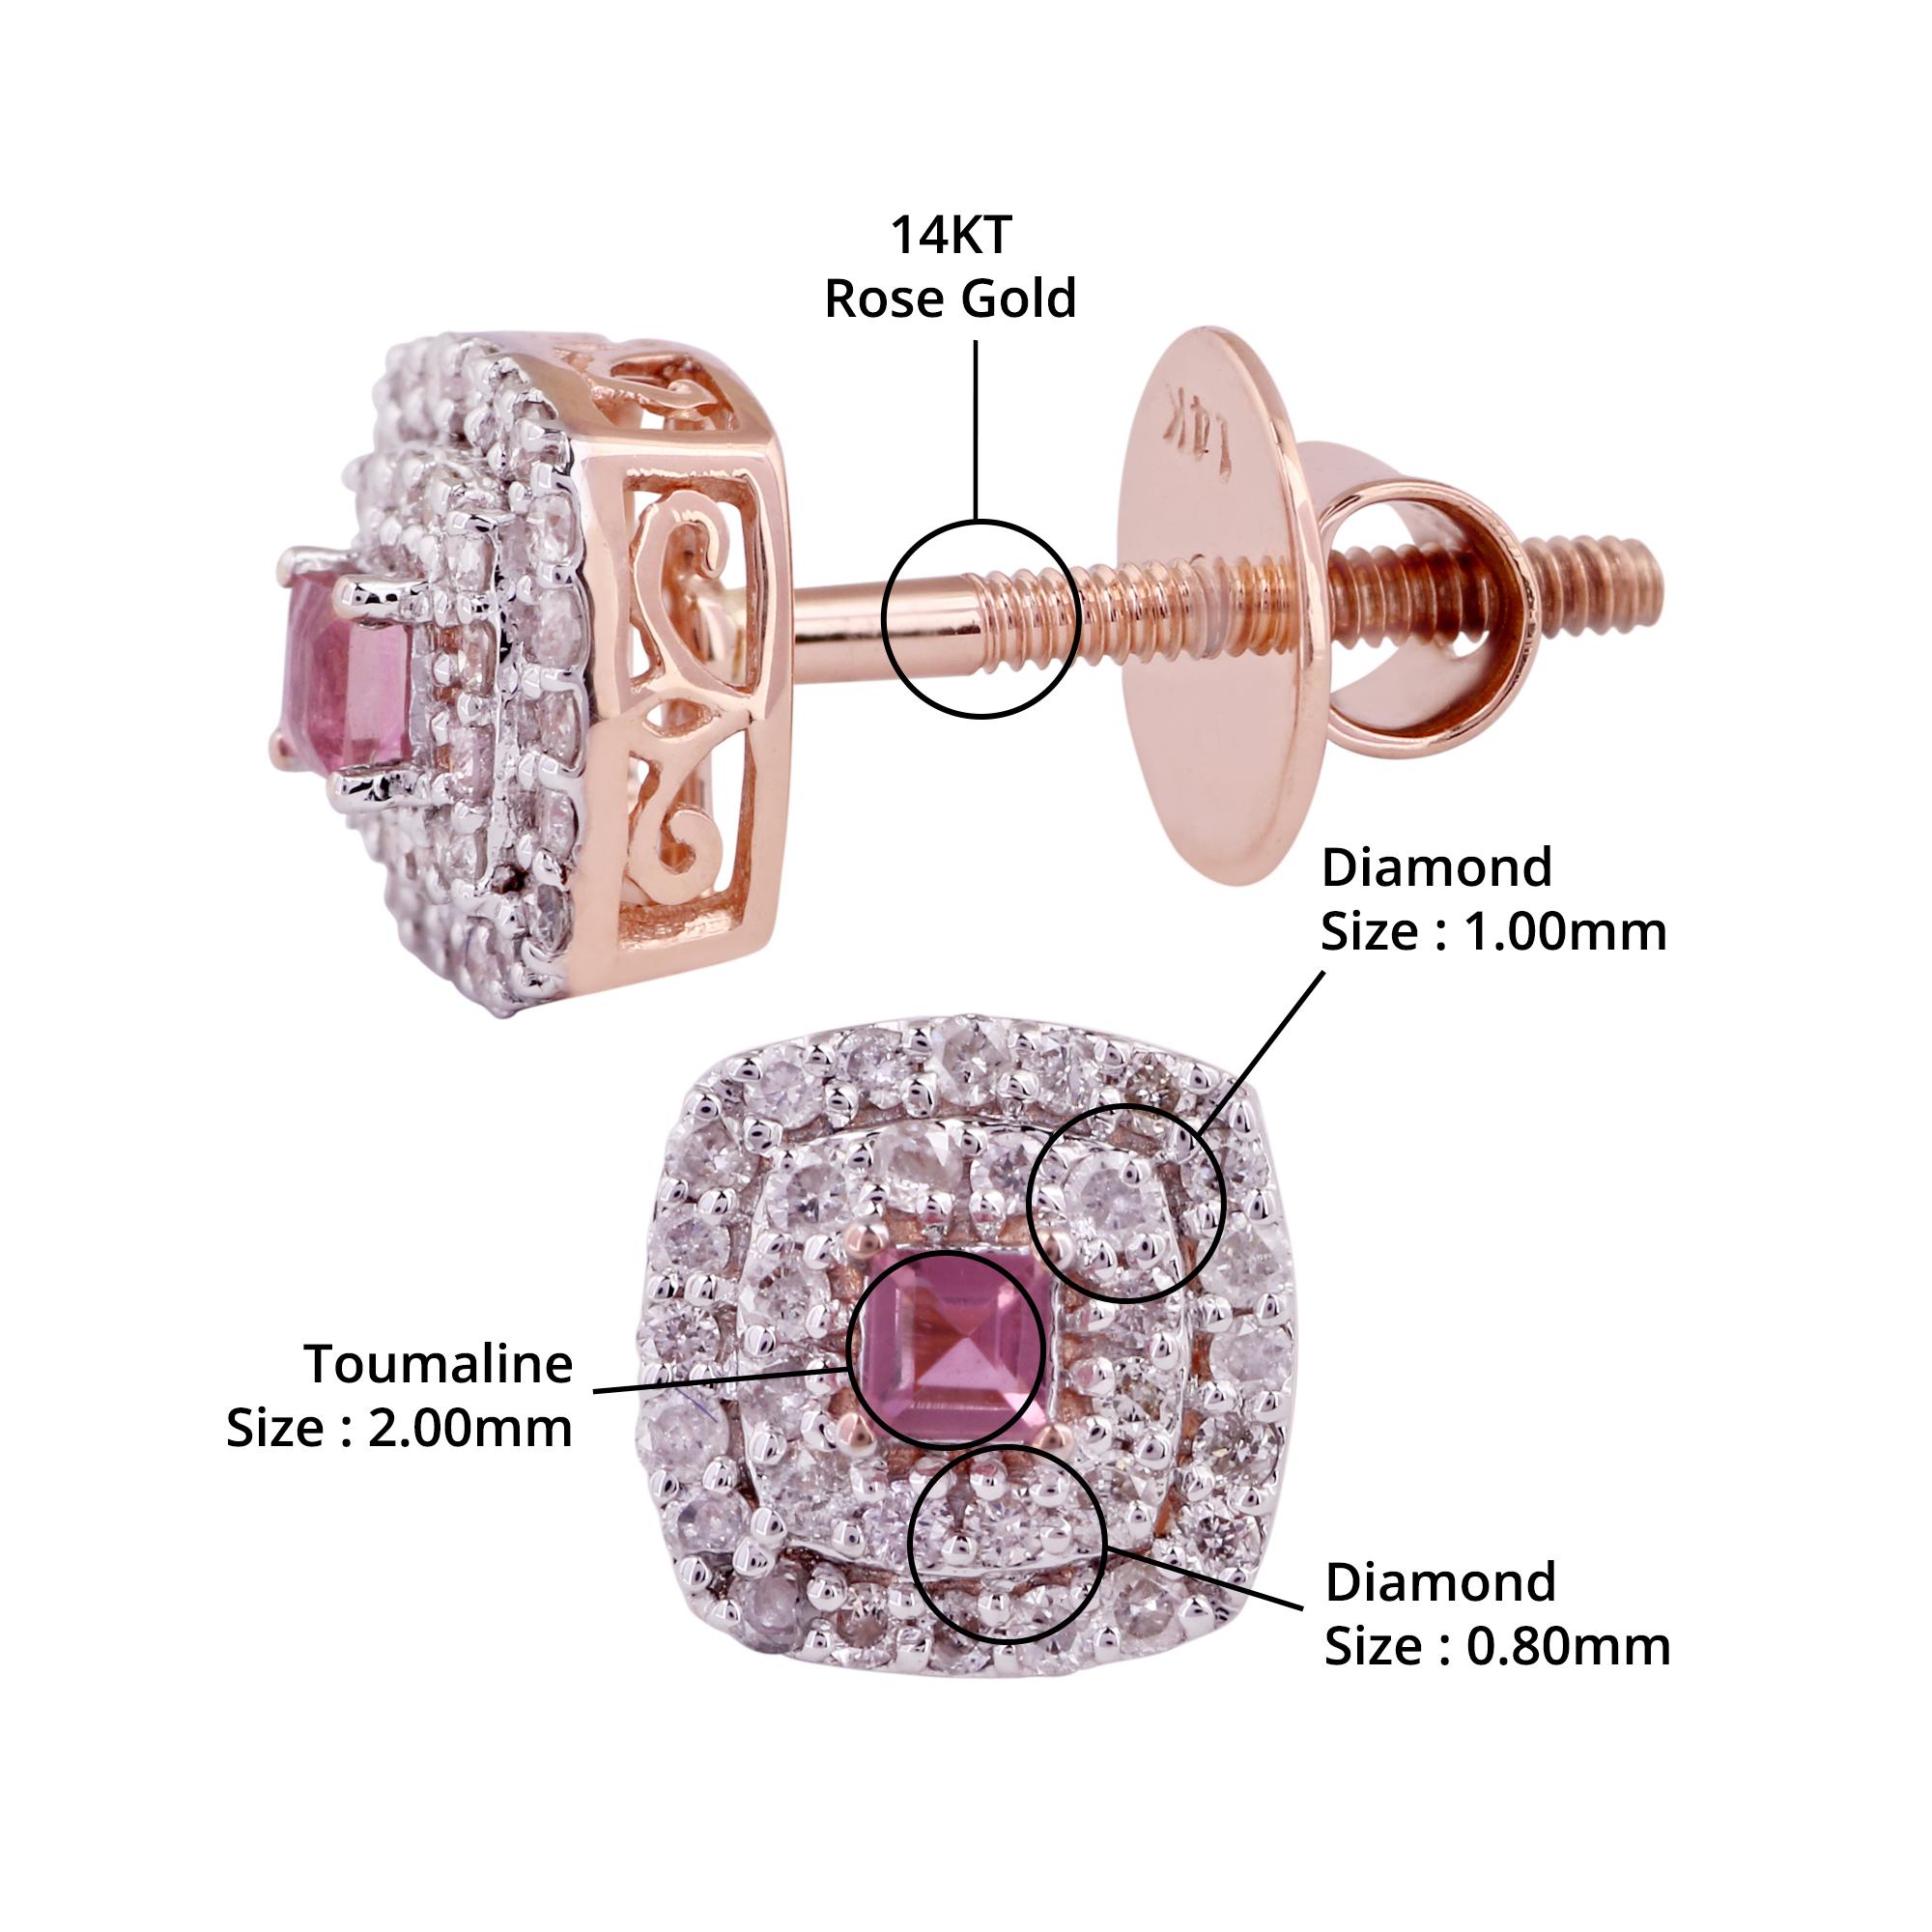 Item details:-

✦ SKU:- JER00727RRR

✦ Material :- Gold

✦ Metal Purity : 14K Rose Gold 

✦ Gemstone Specification:-
✧ Clear Diamond (l1/HI) Round - 0.80mm - 56 Pcs
✧ Clear Diamond (l1/HI) Round - 1.00mm - 8 Pcs
✧ Natural Tourmaline - 2.00mm - 2